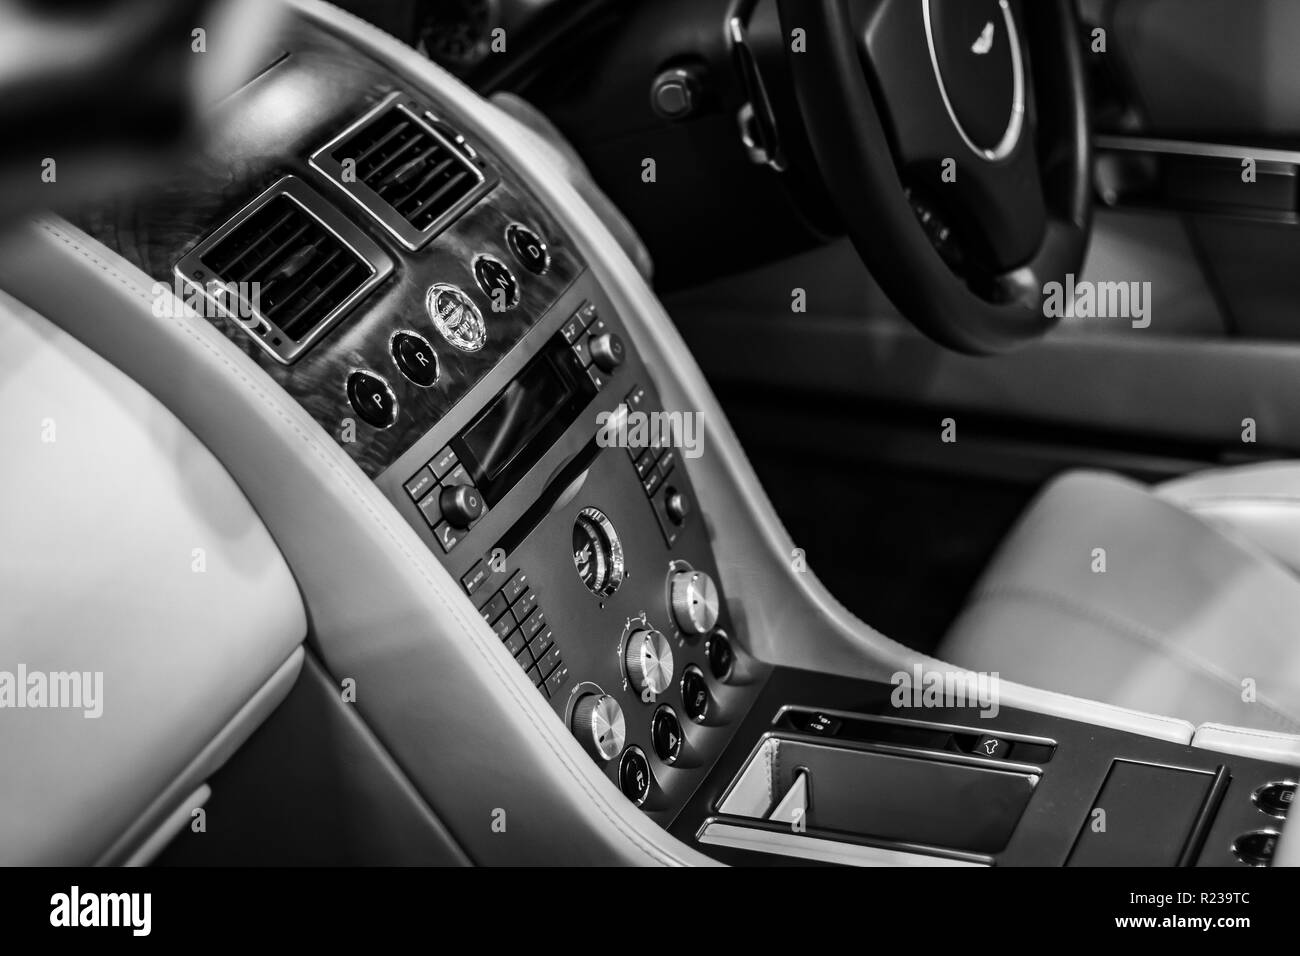 Innenraum Armaturenbrett Eines Luxuriosen Aston Martin Db9